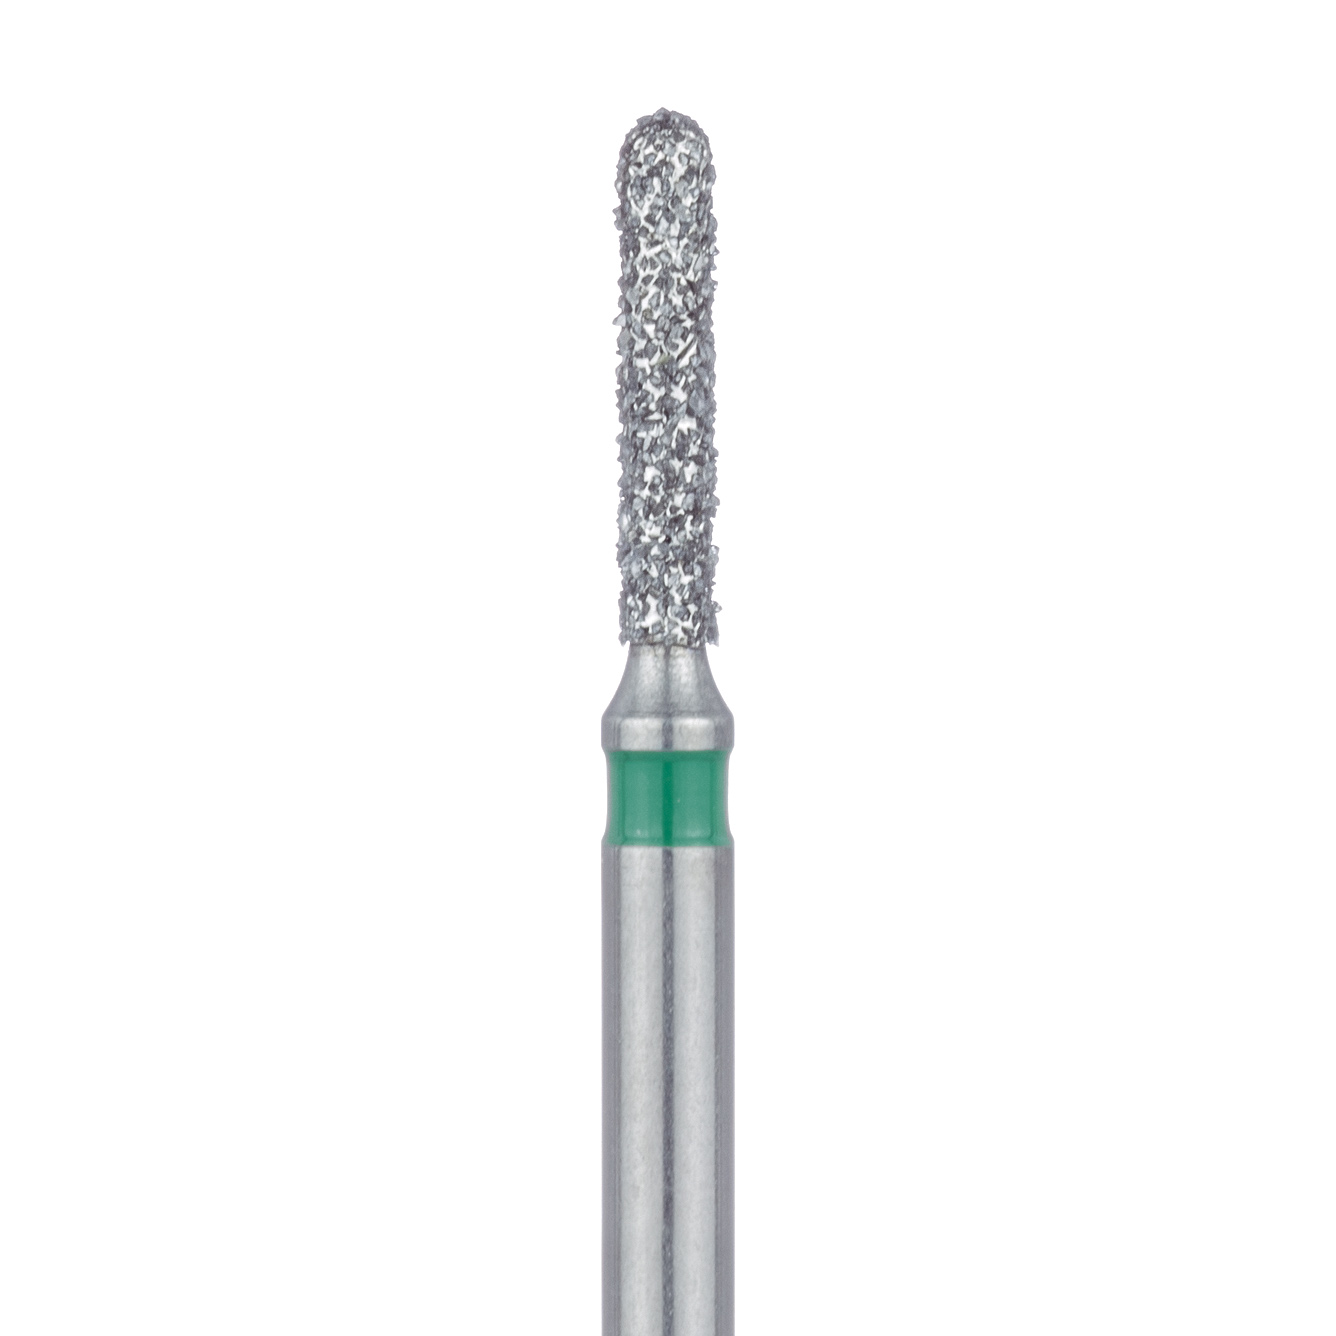 838LG-012-FG Long Round End Cylinder Diamond Bur, 1.2mm Ø, Coarse, FG